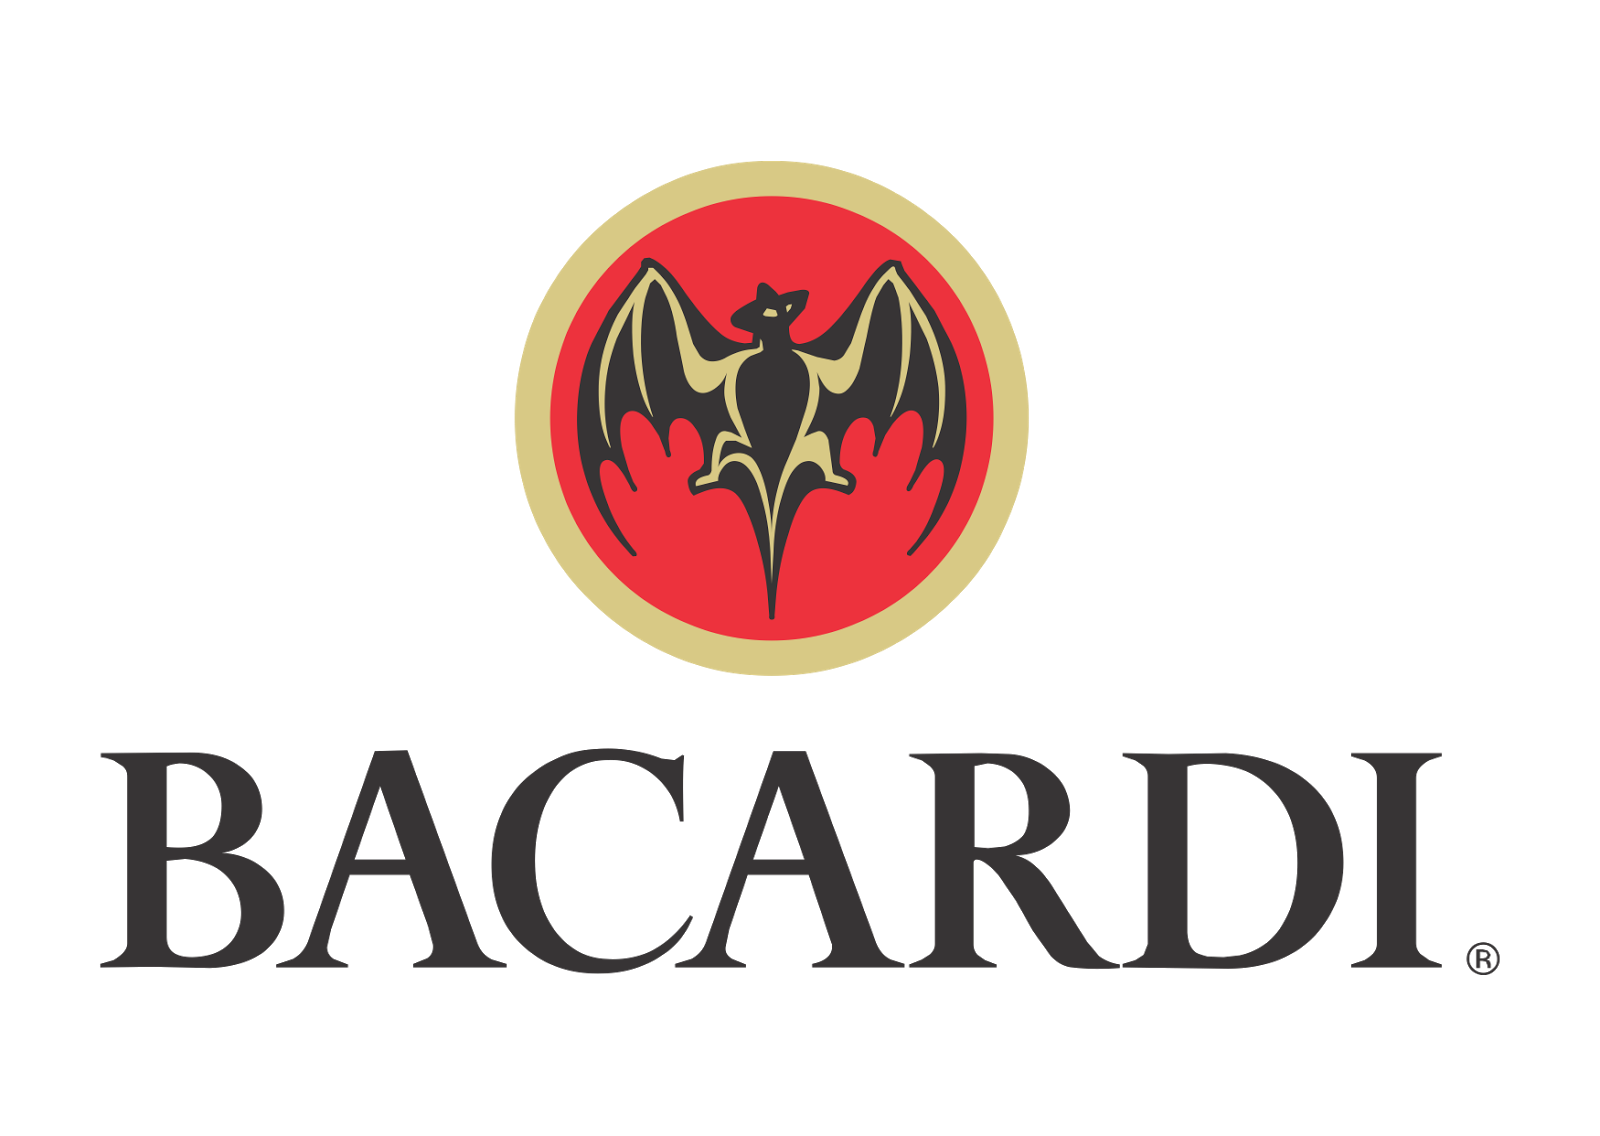 Bacardi press release